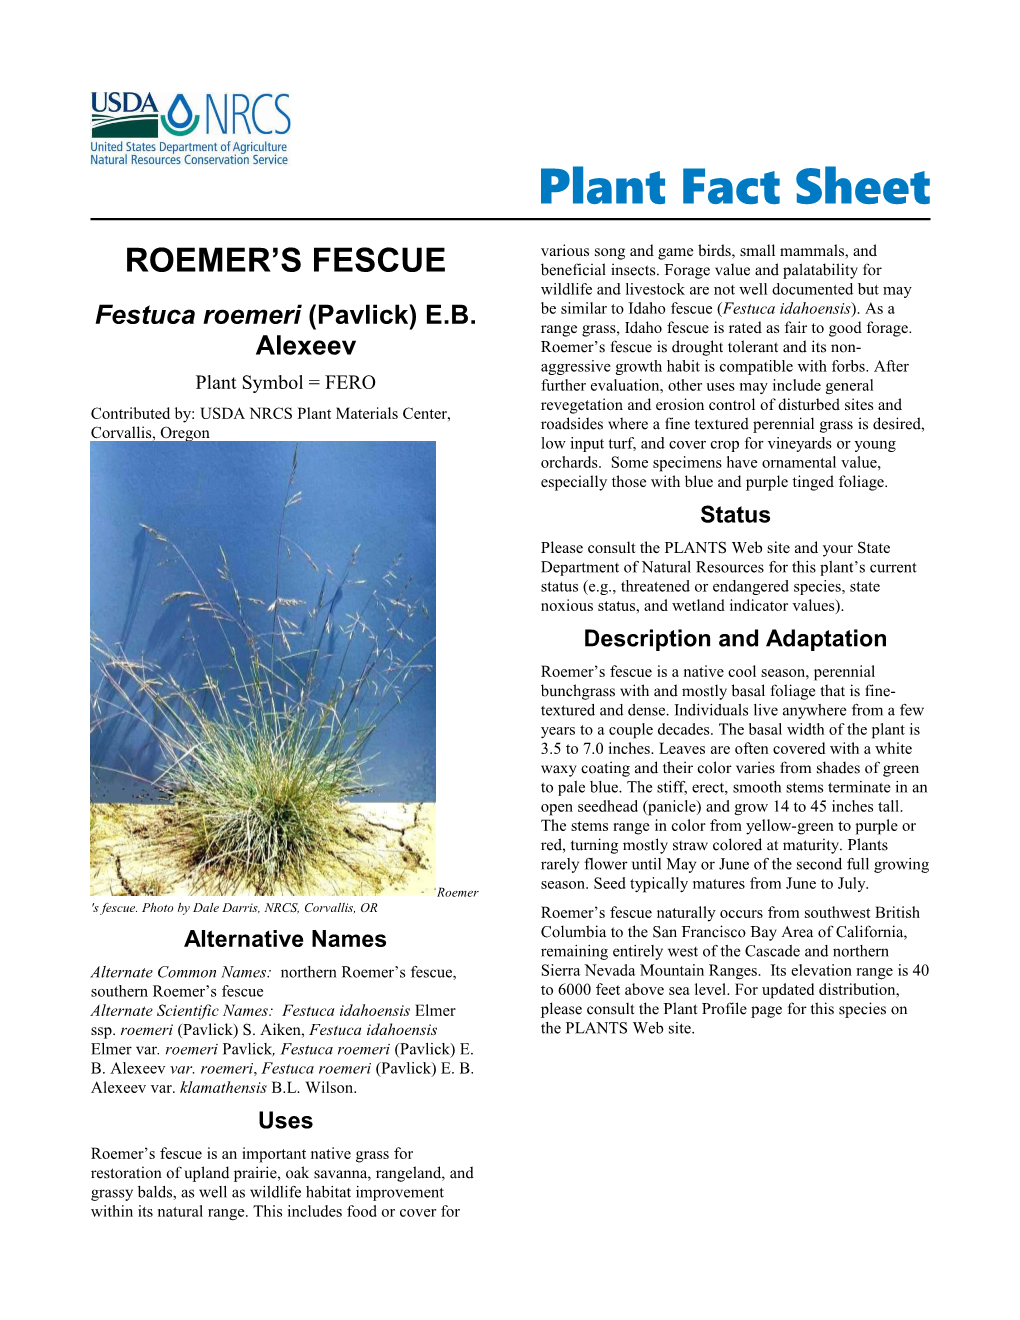 Plant Fact Sheet for Roemer S Fescue (Festuca Roemeri)